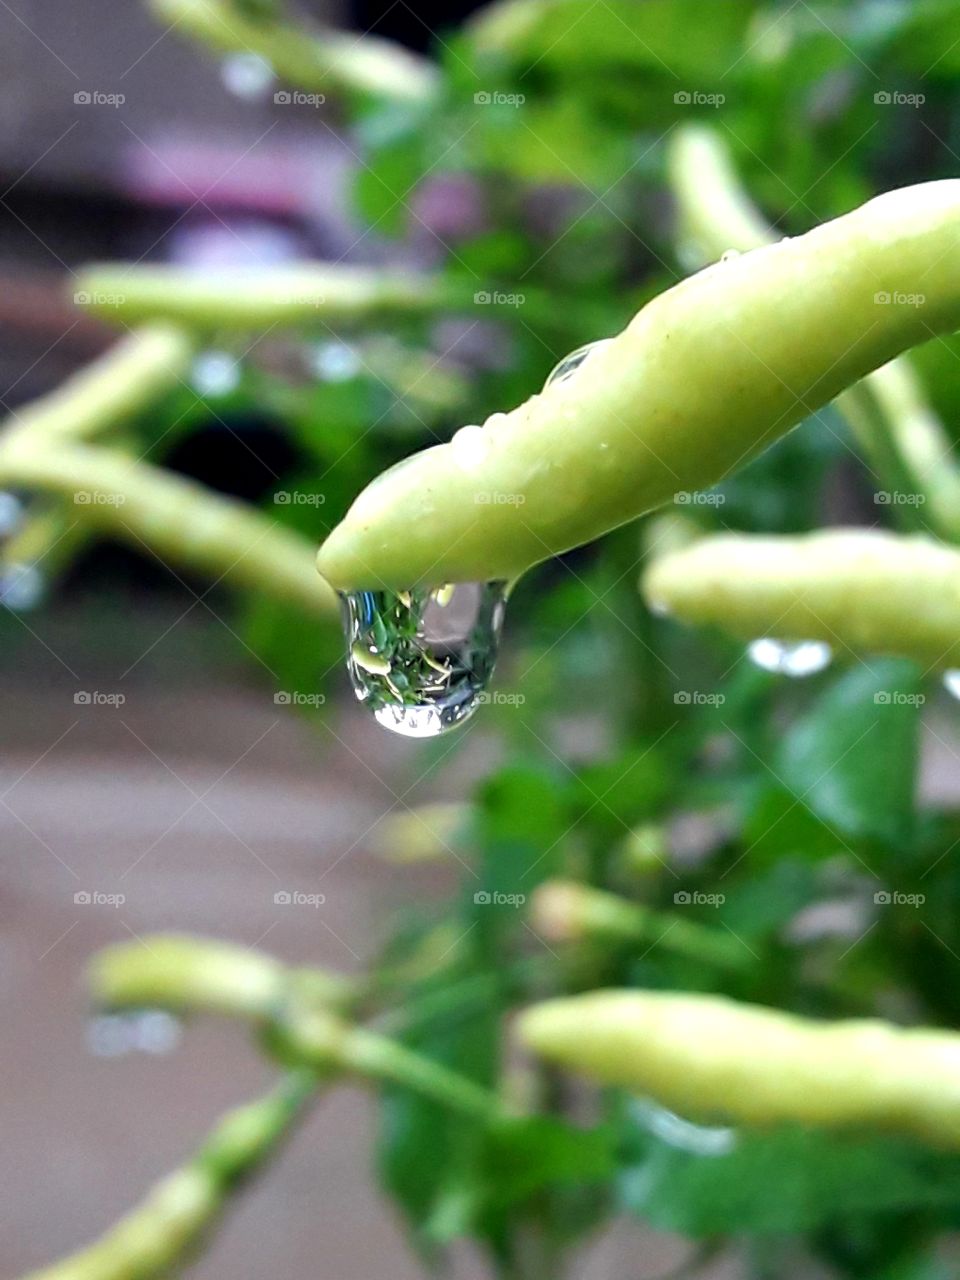 Rain waters a water drop hanging inside a green chilli